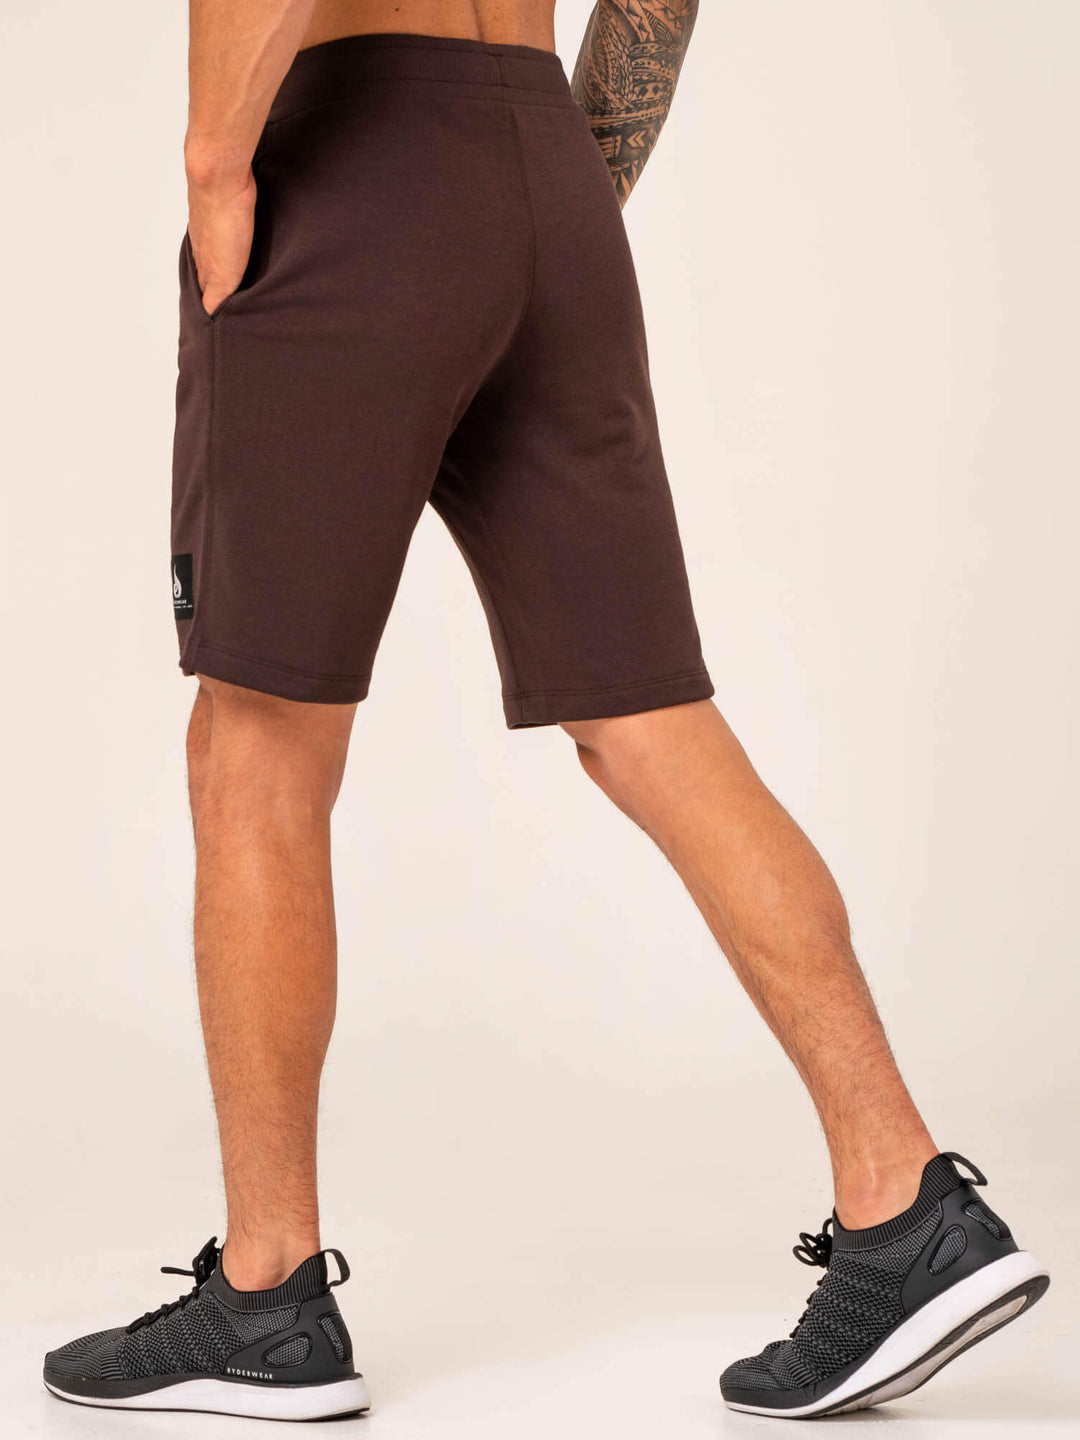 Terrain Track Shorts - Dark Oak Clothing Ryderwear 